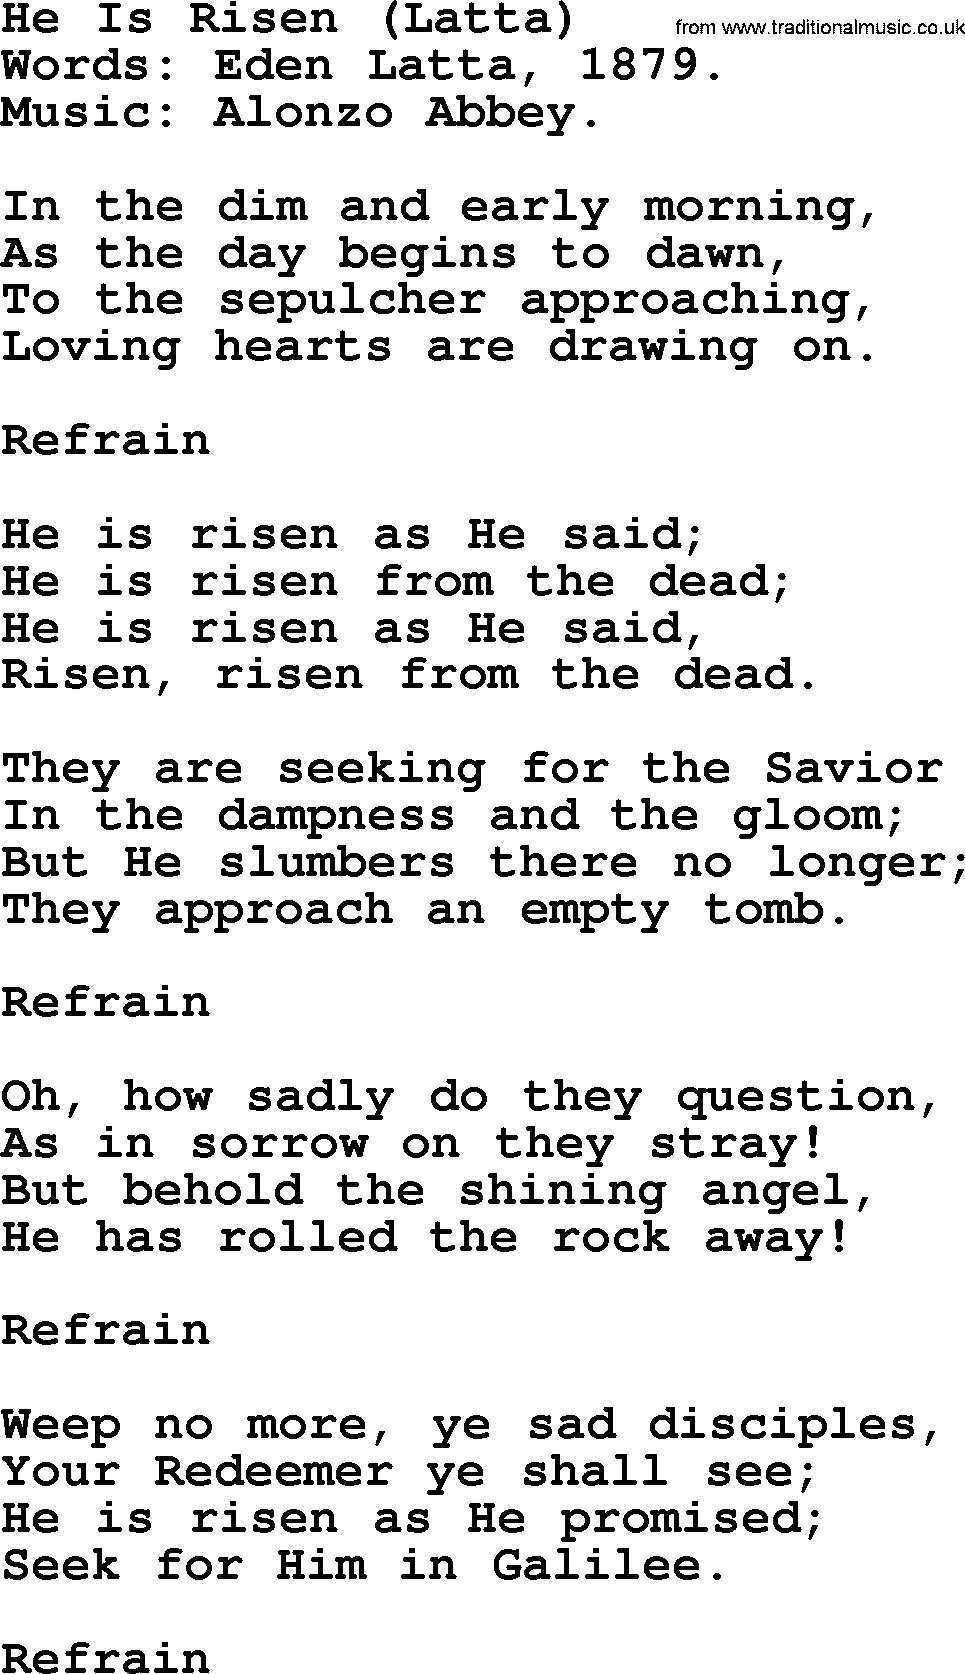 Easter Hymns, Hymn: He Is Risen (latta), lyrics with PDF